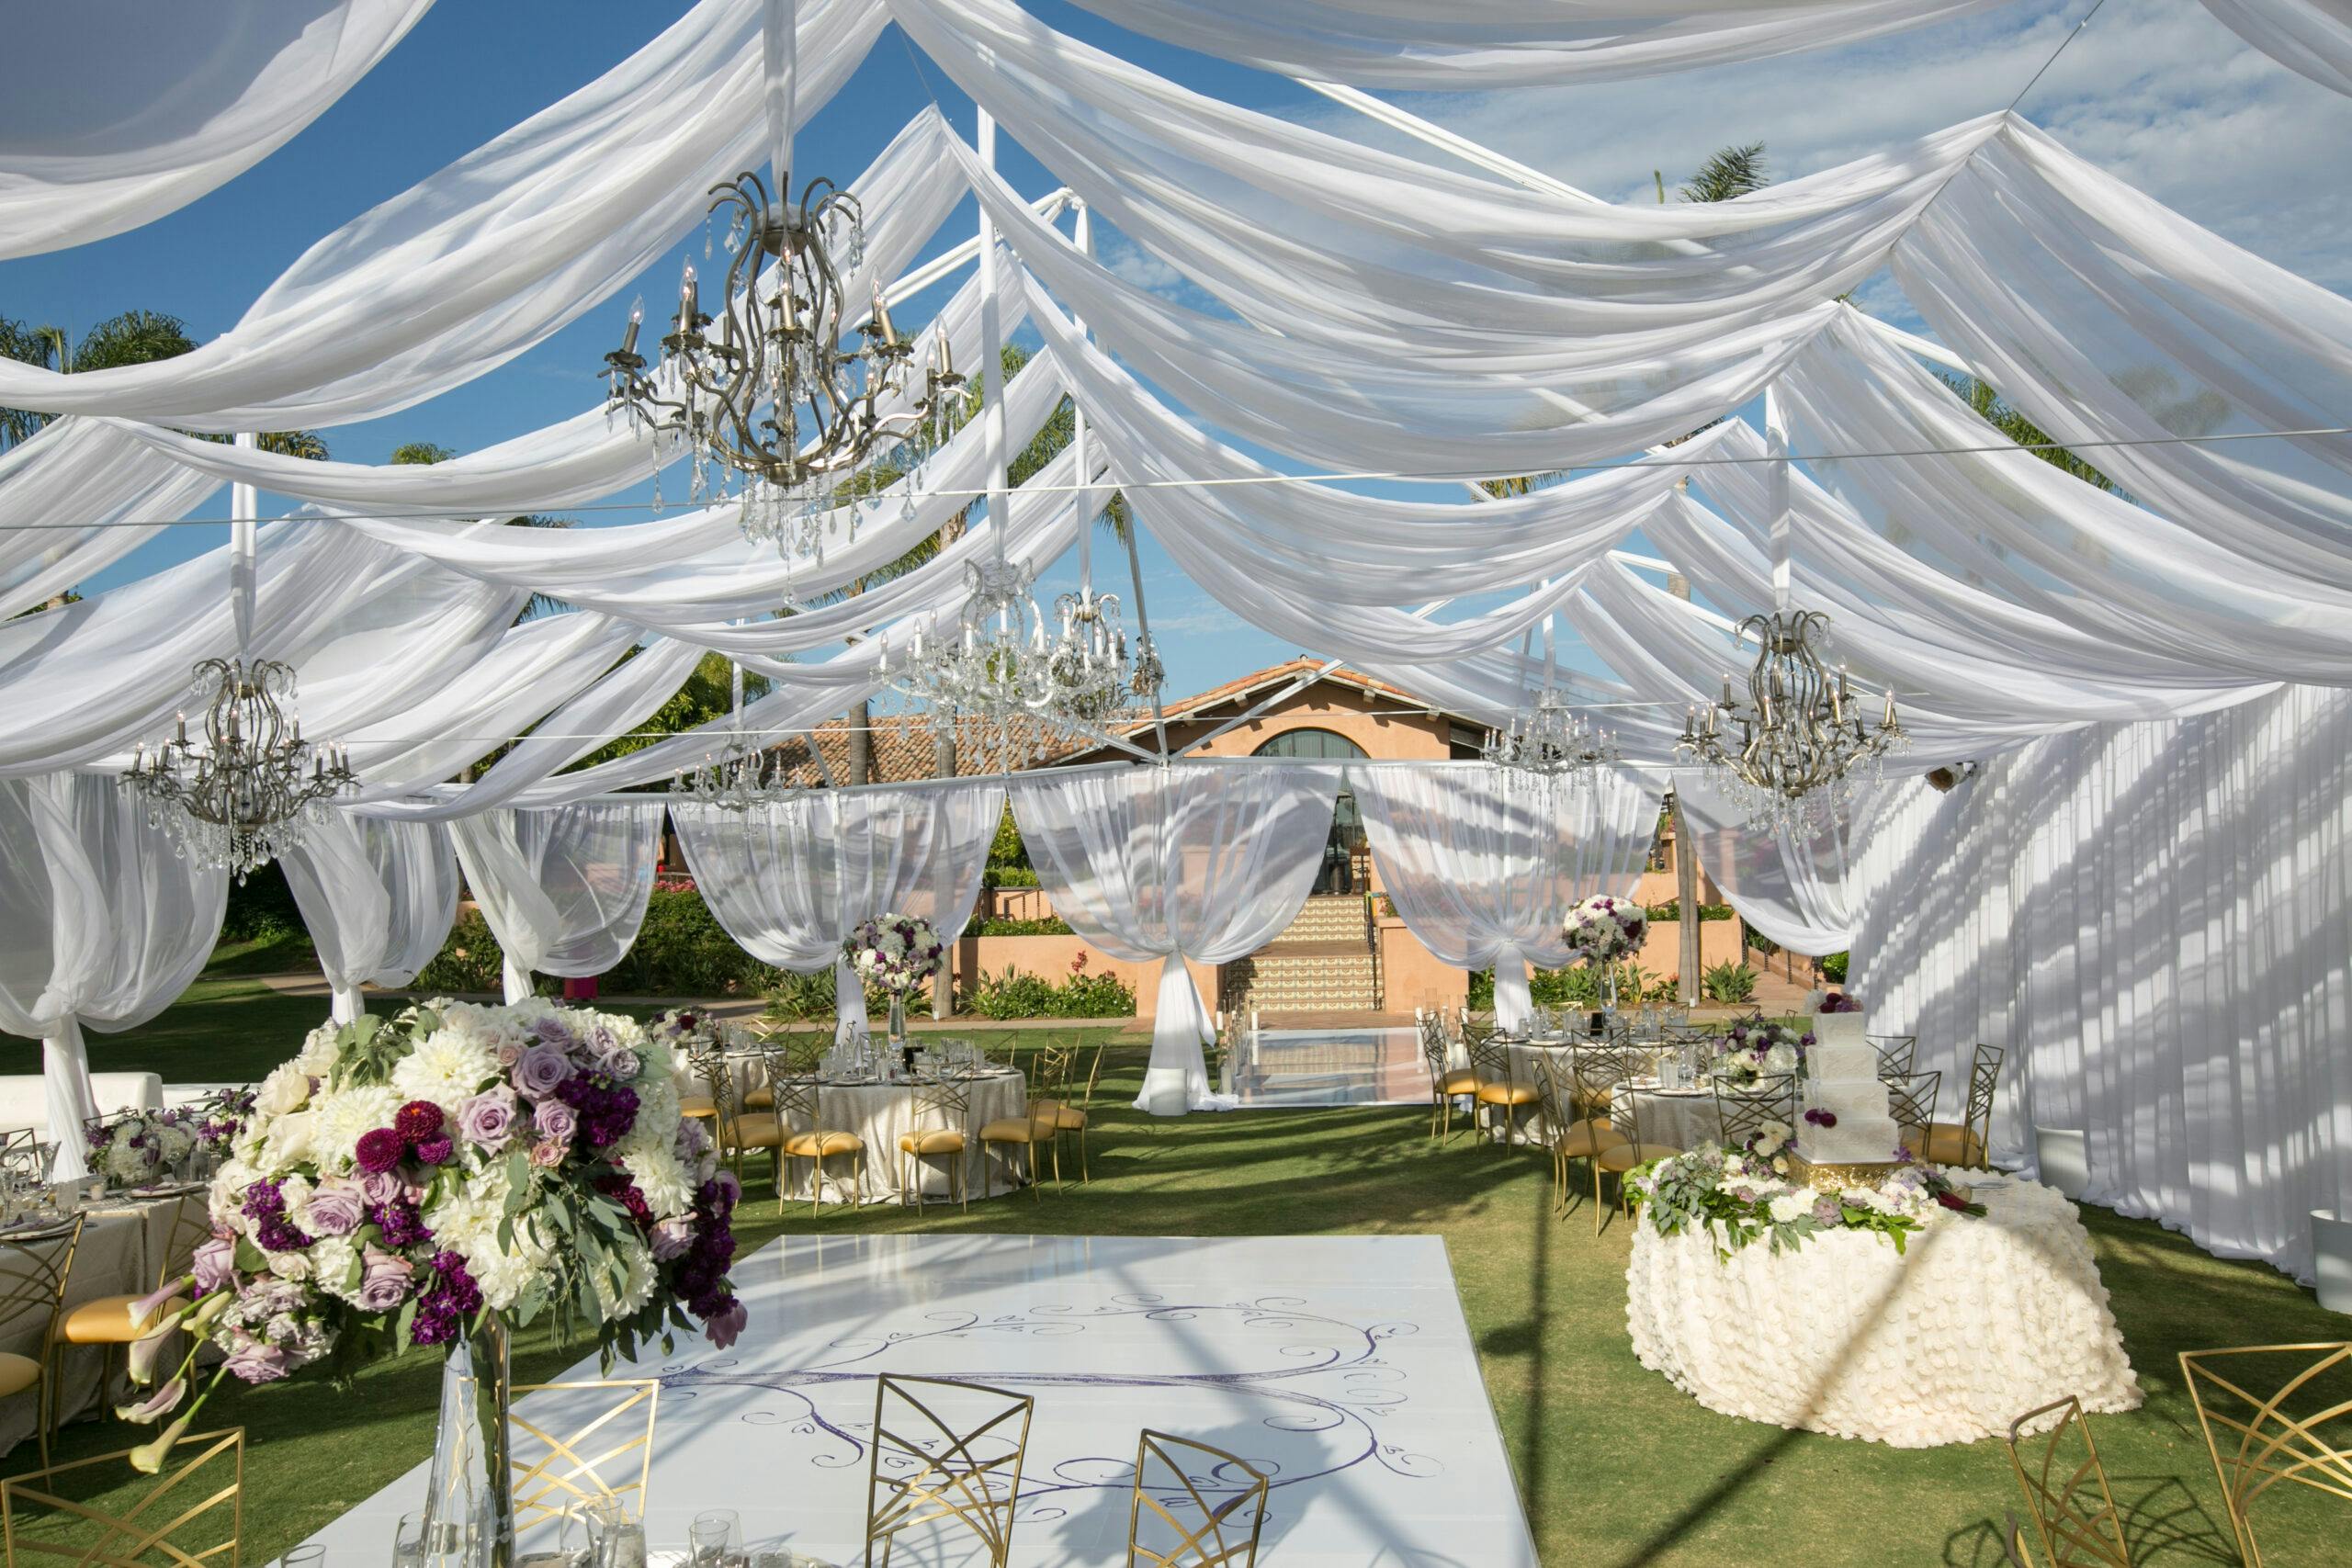 outdoor wedding tents ideas